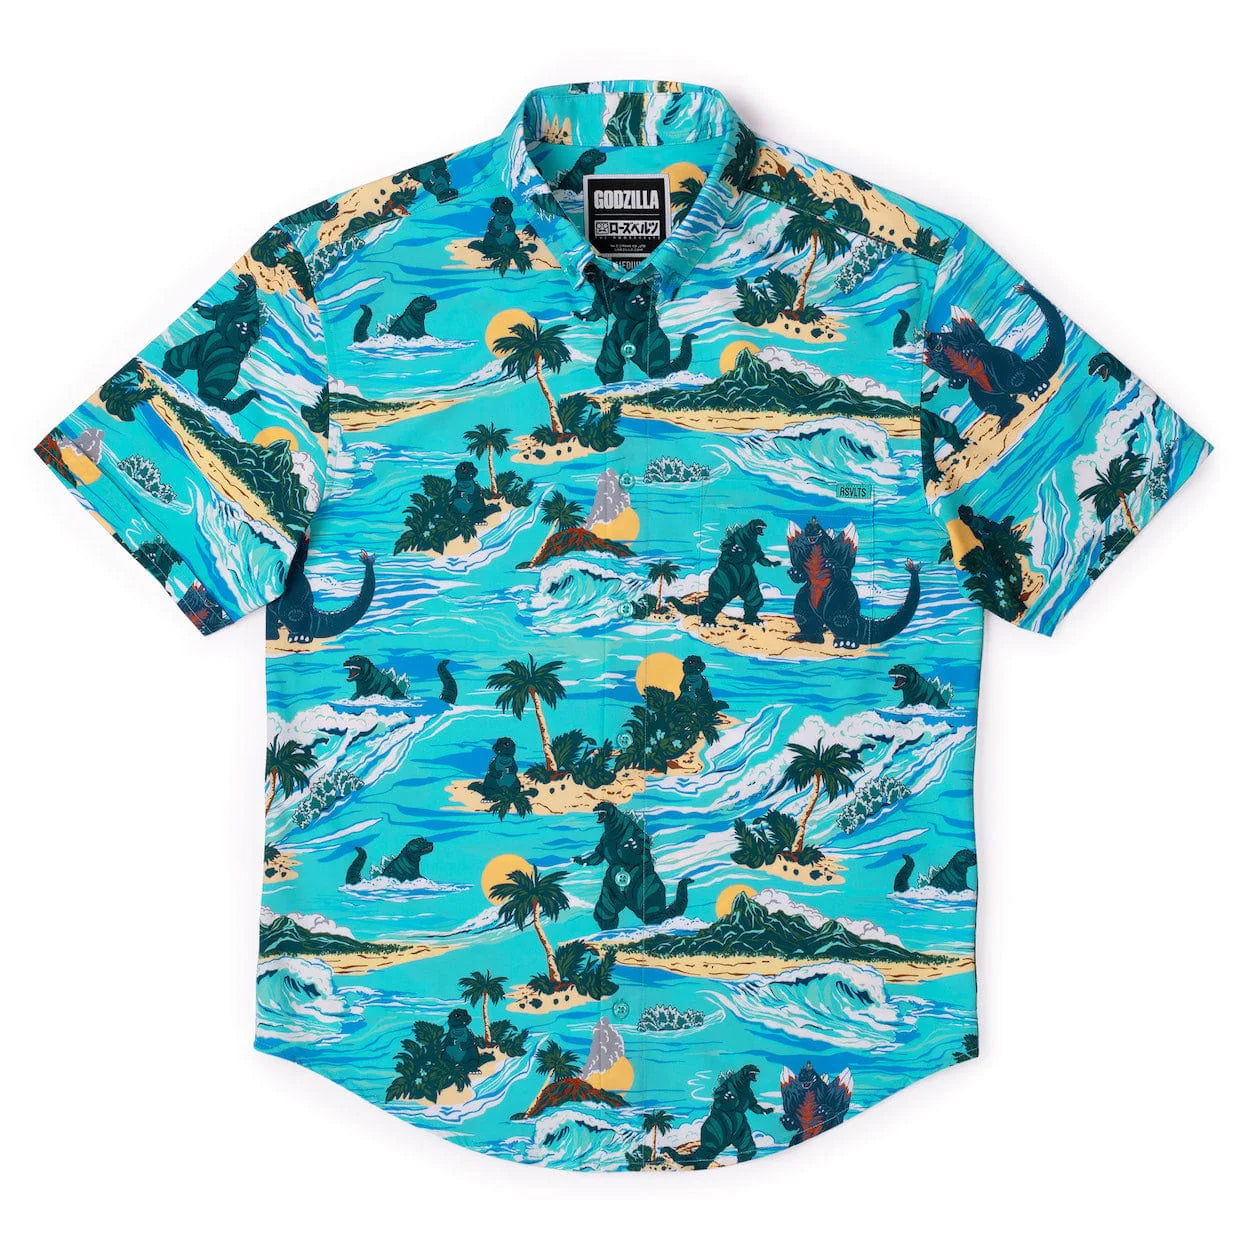 Godzilla "Making Waves" - KUNUFLEX Short Sleeve Shirt